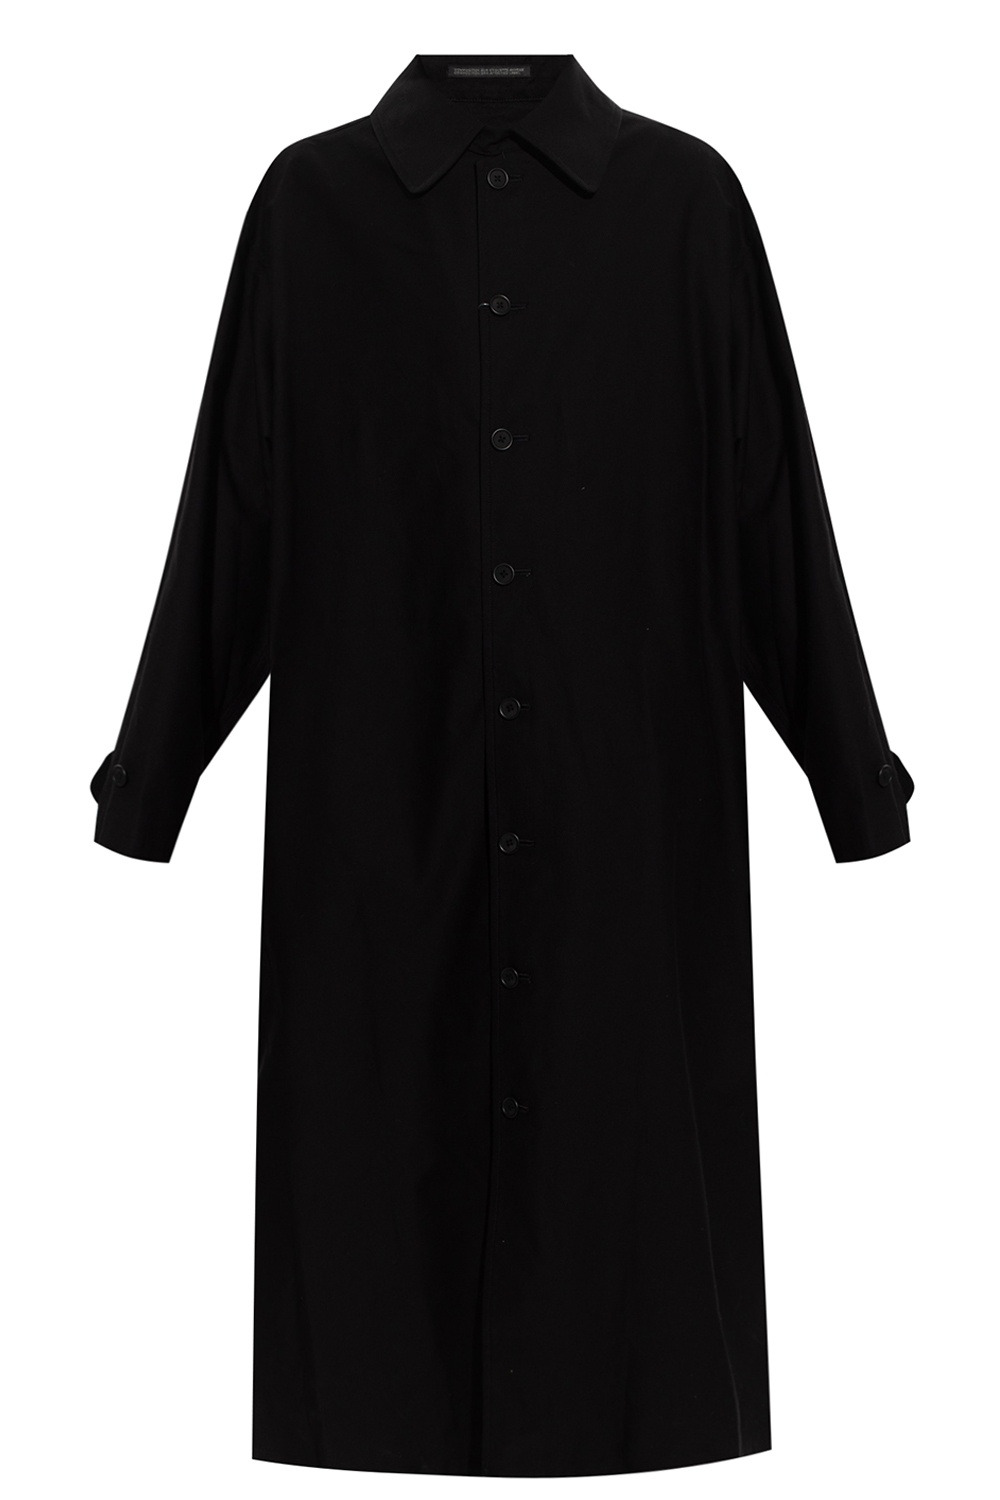 Yohji Yamamoto Cotton coat